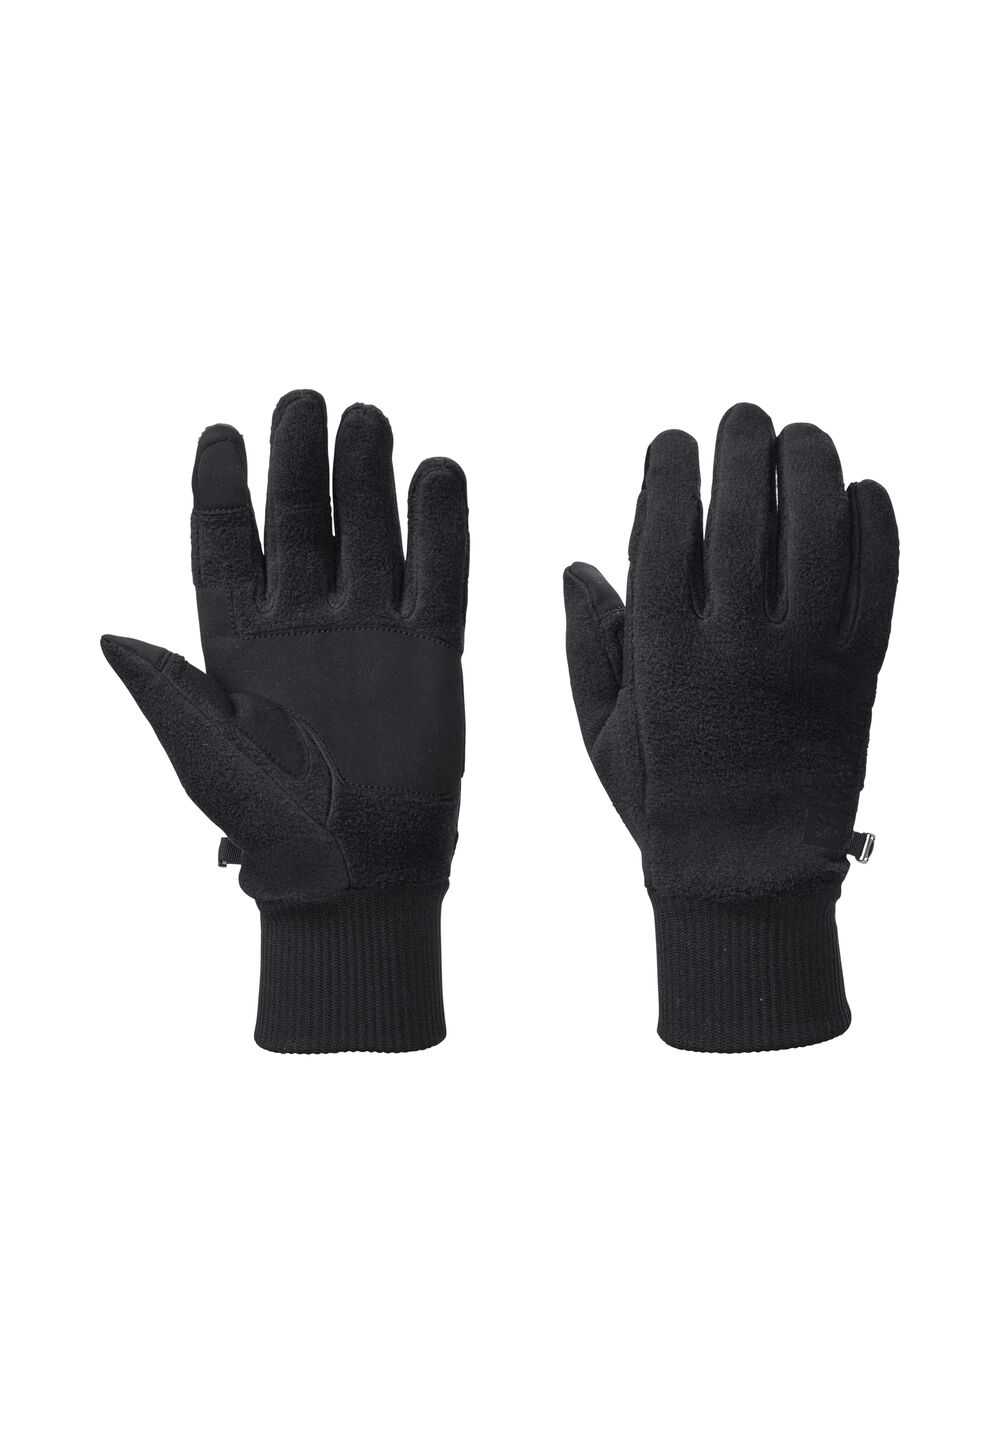 Jack Wolfskin Vertigo Glove Fleece handschoenen M zwart black